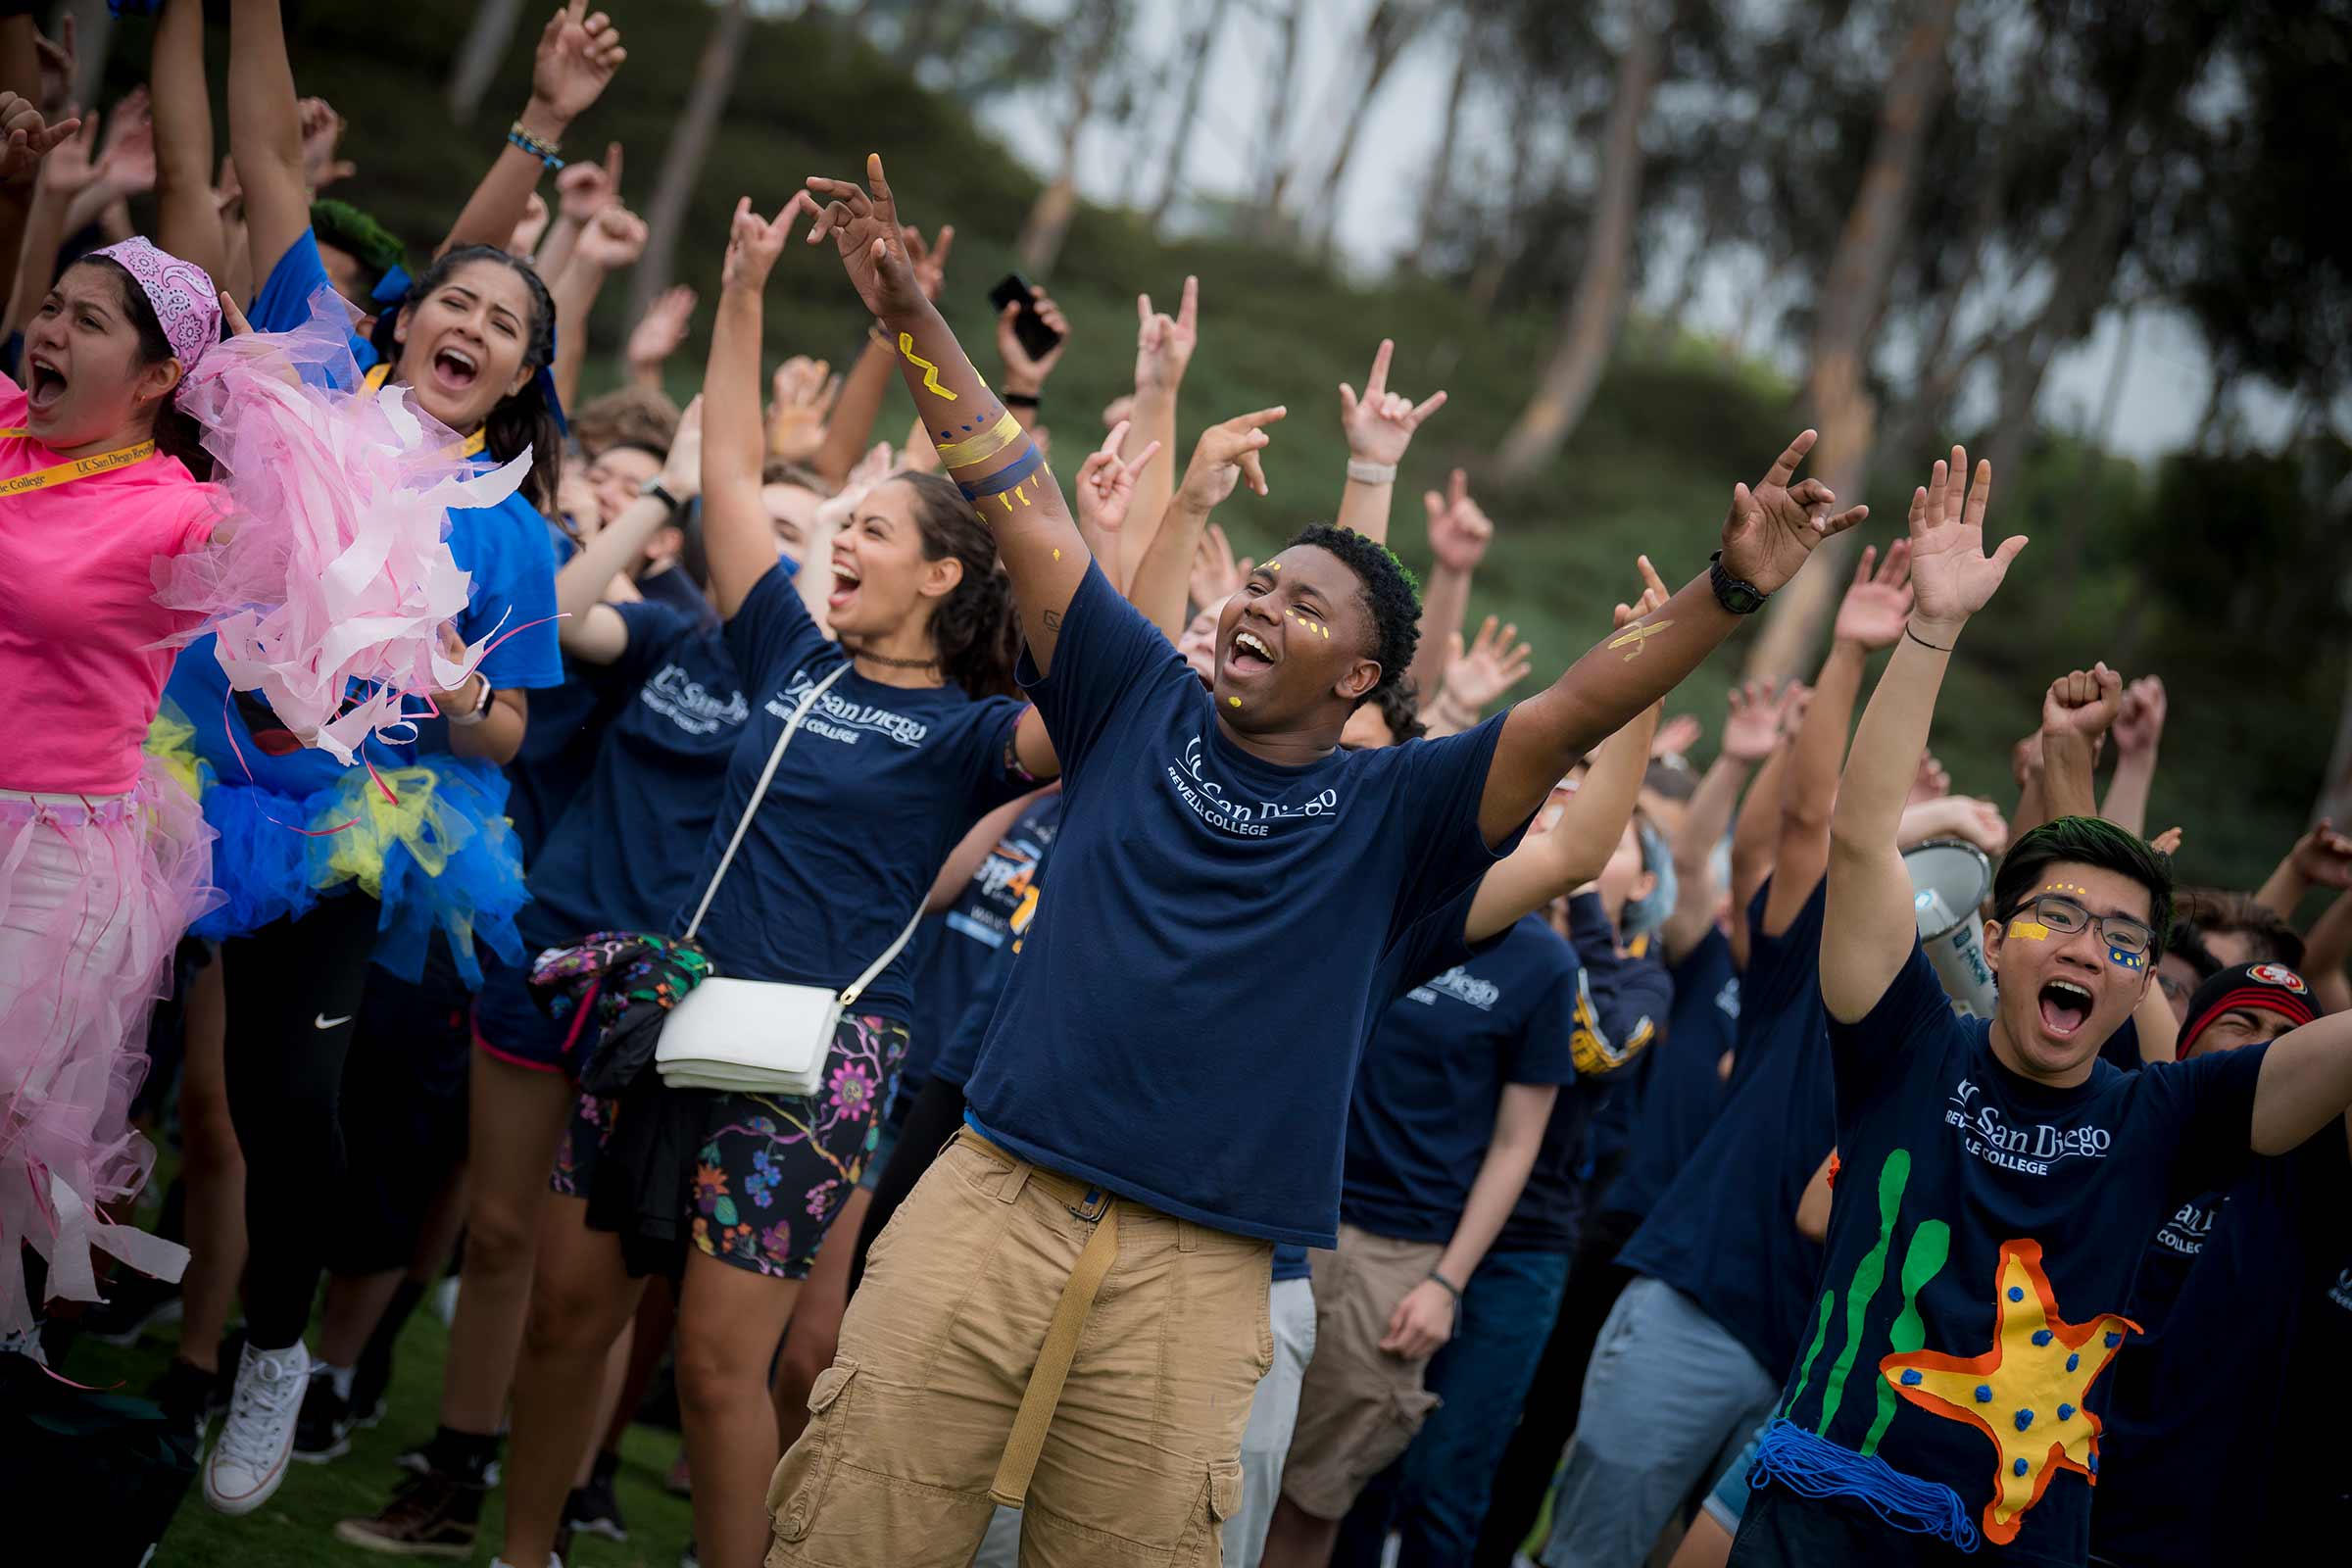 UC San Diego students celebrating back to school